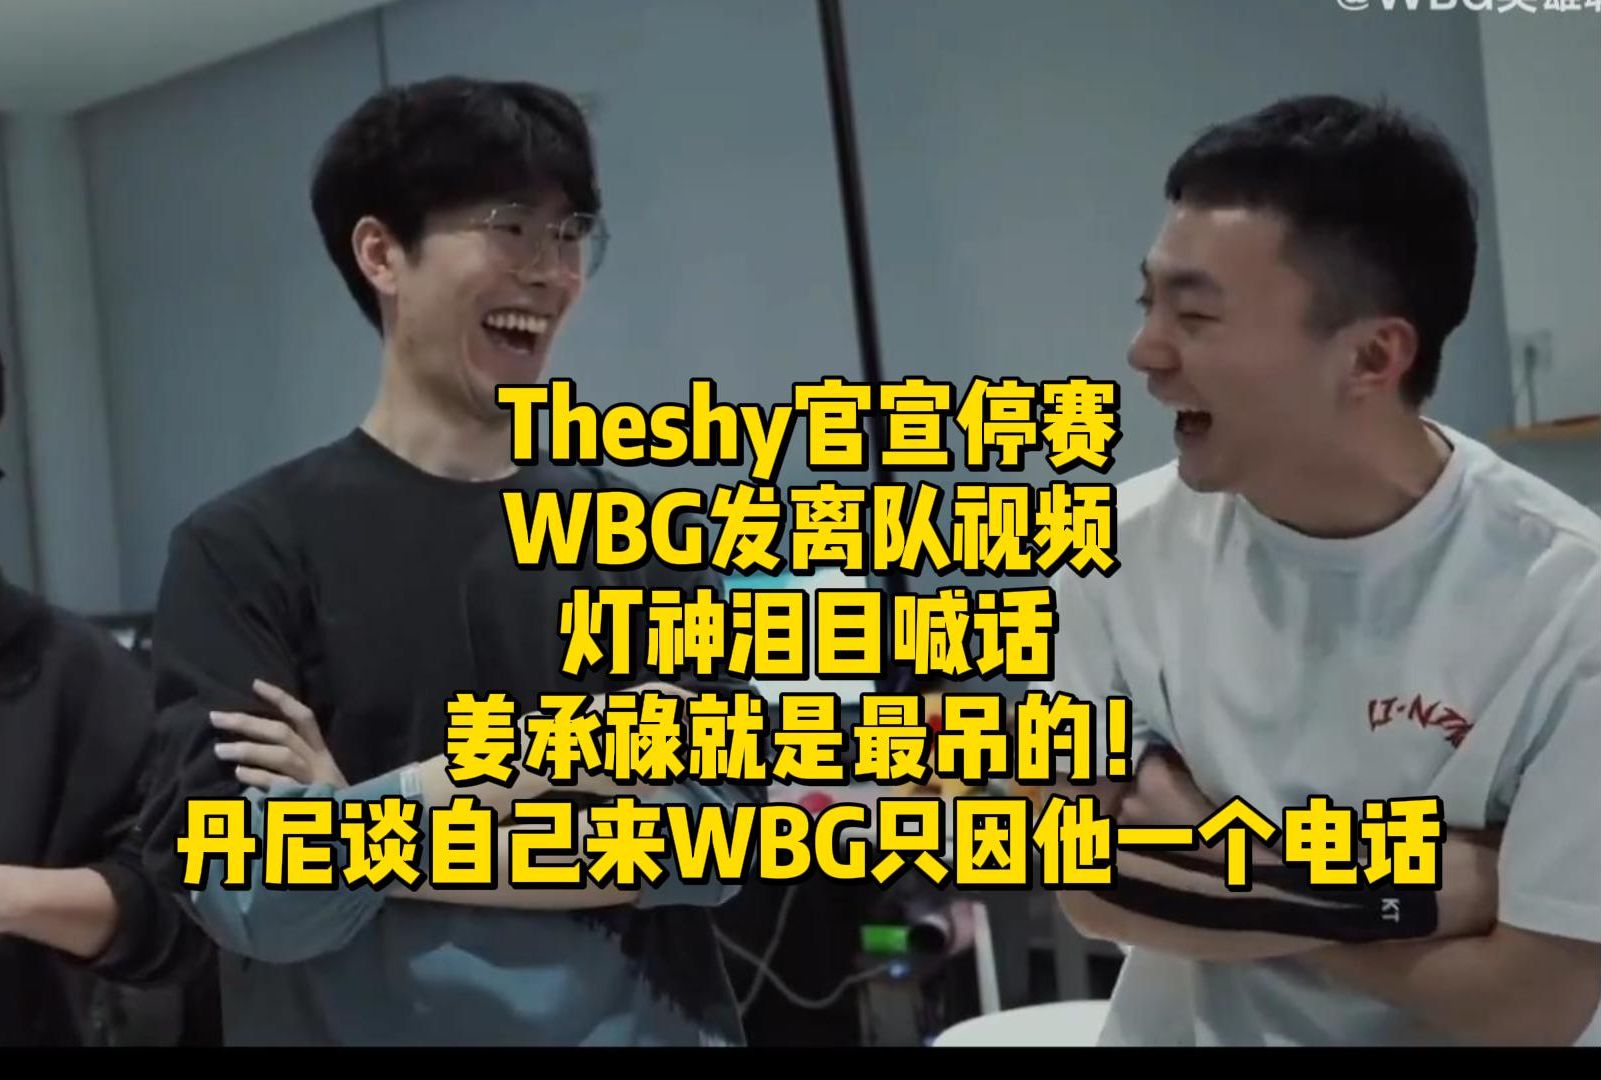 WBG官宣小虎加盟，刘青松即将连接，宝蓝复出UP，仁川人又狂喜！